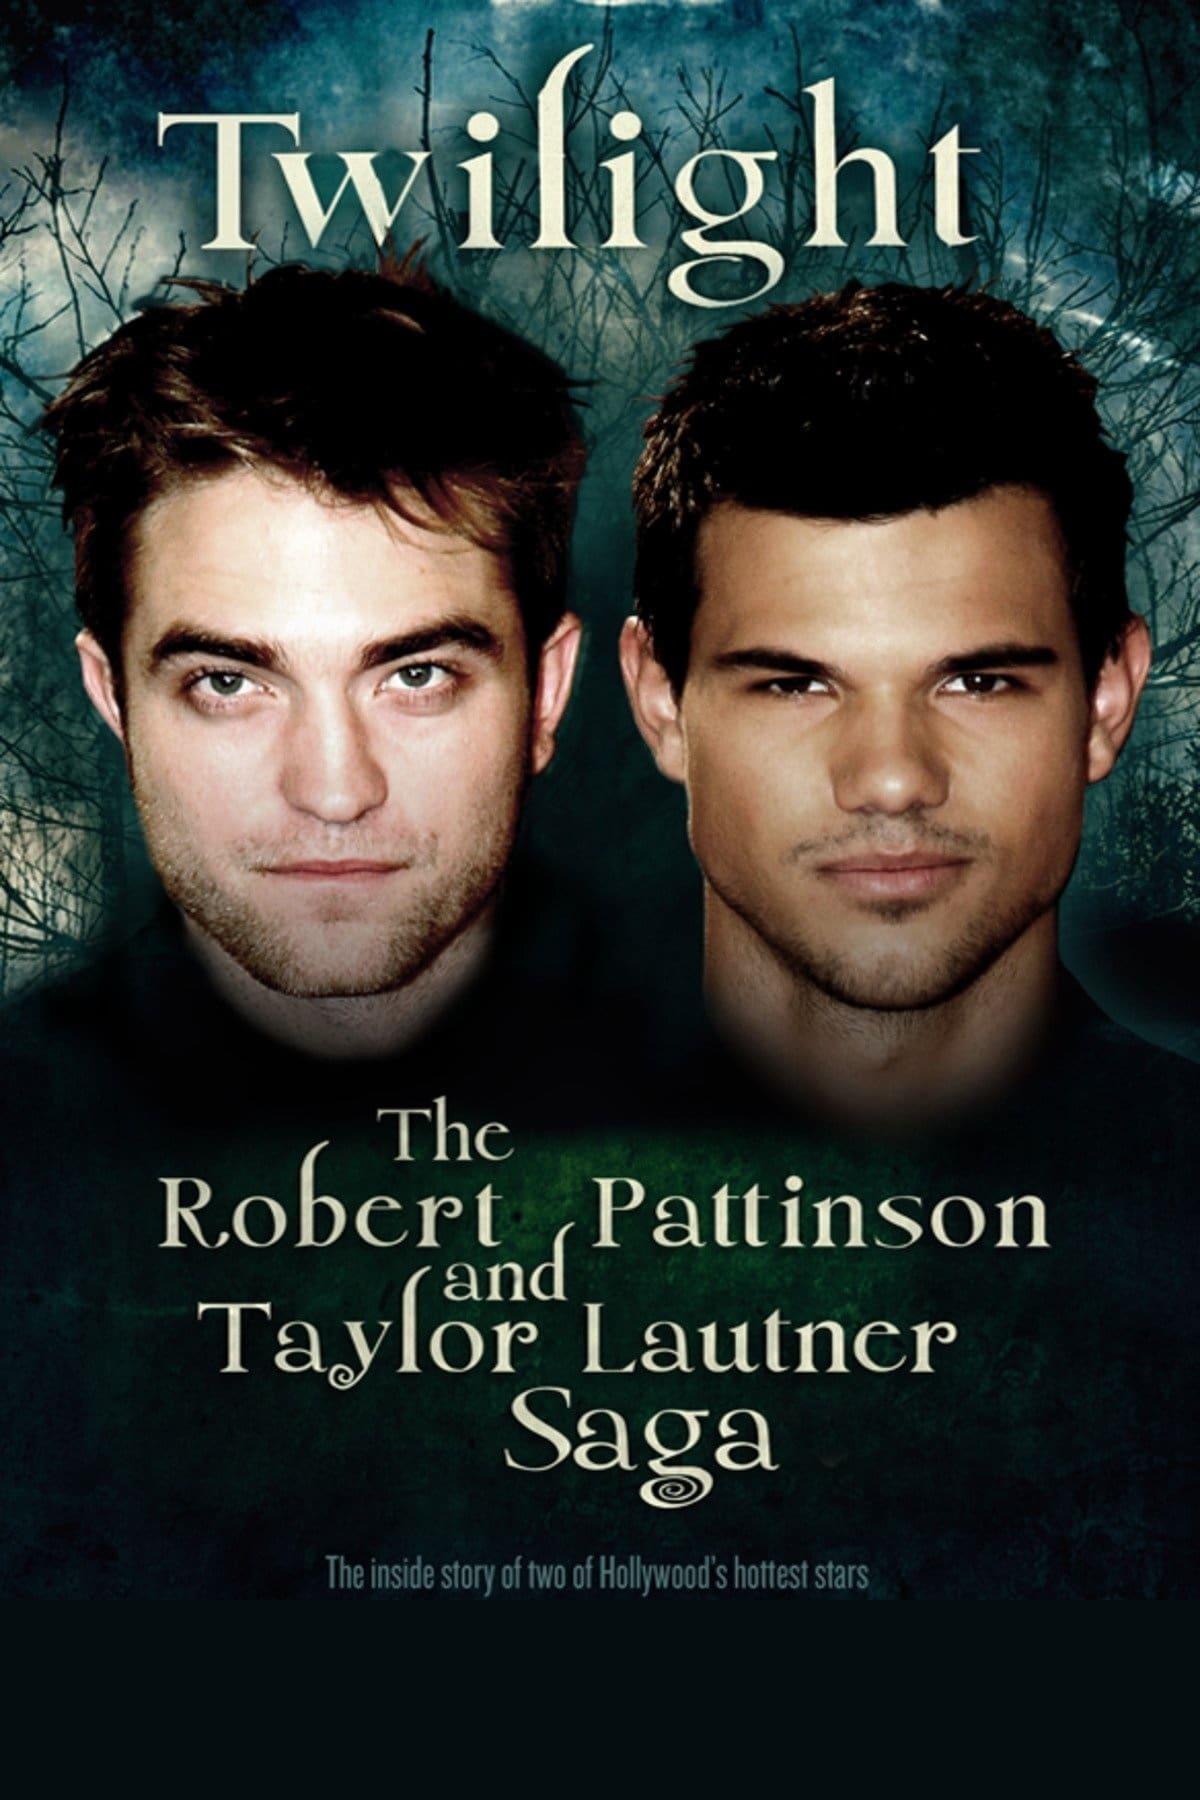 Twilight: The Robert Pattinson and Taylor Lautner Saga poster